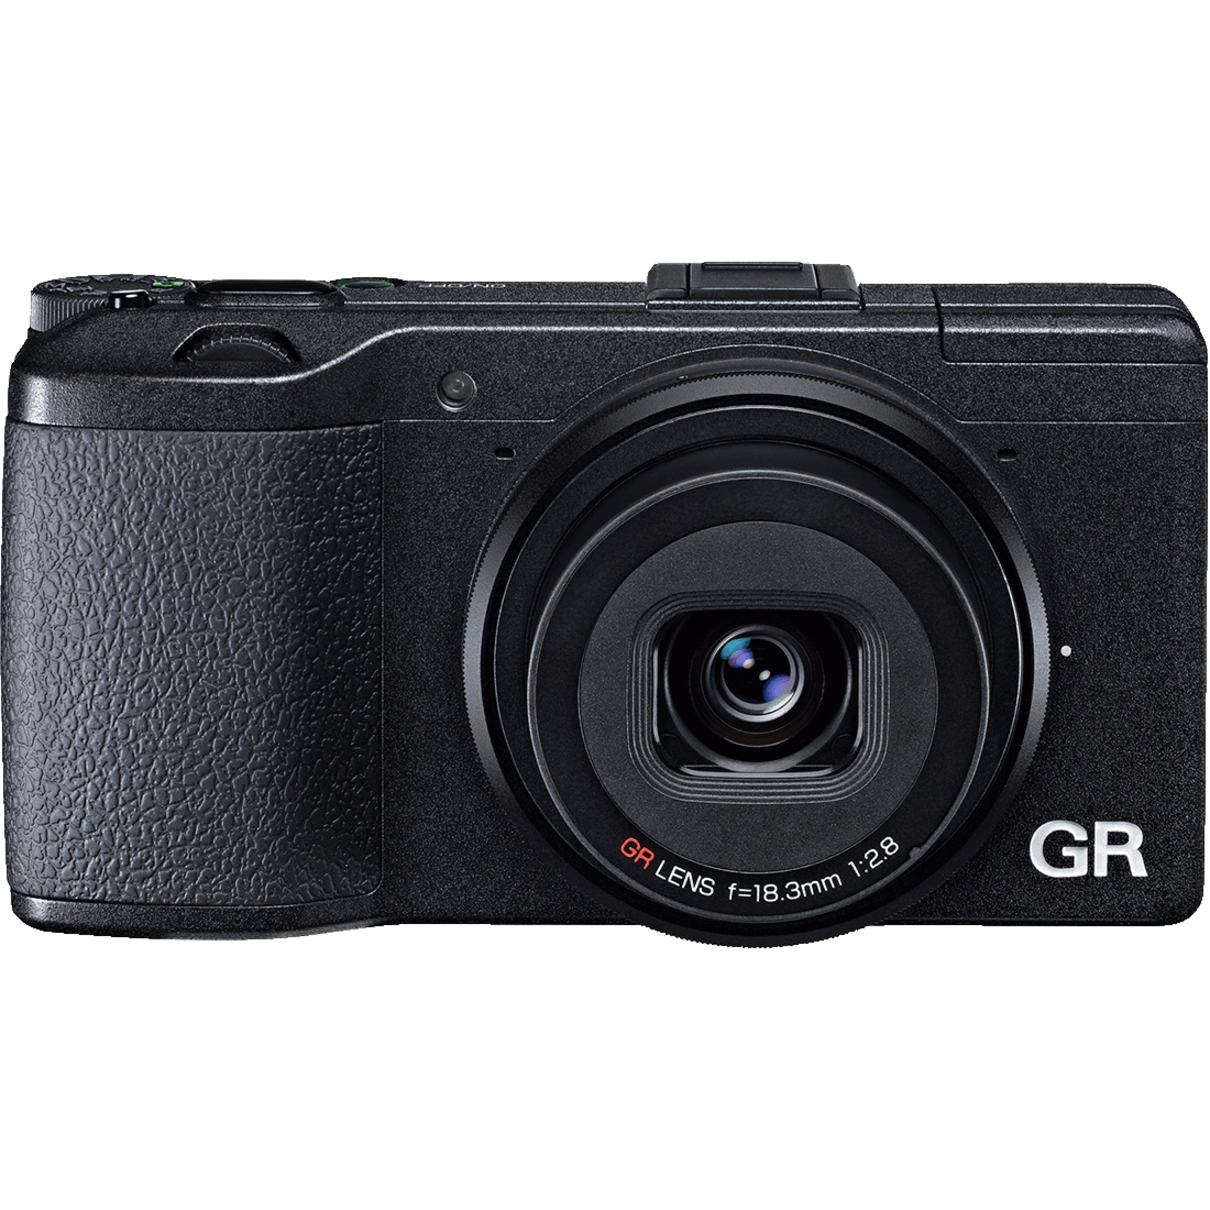 Ricoh GR 16.2 Megapixel Compact Camera, Black - image 1 of 6